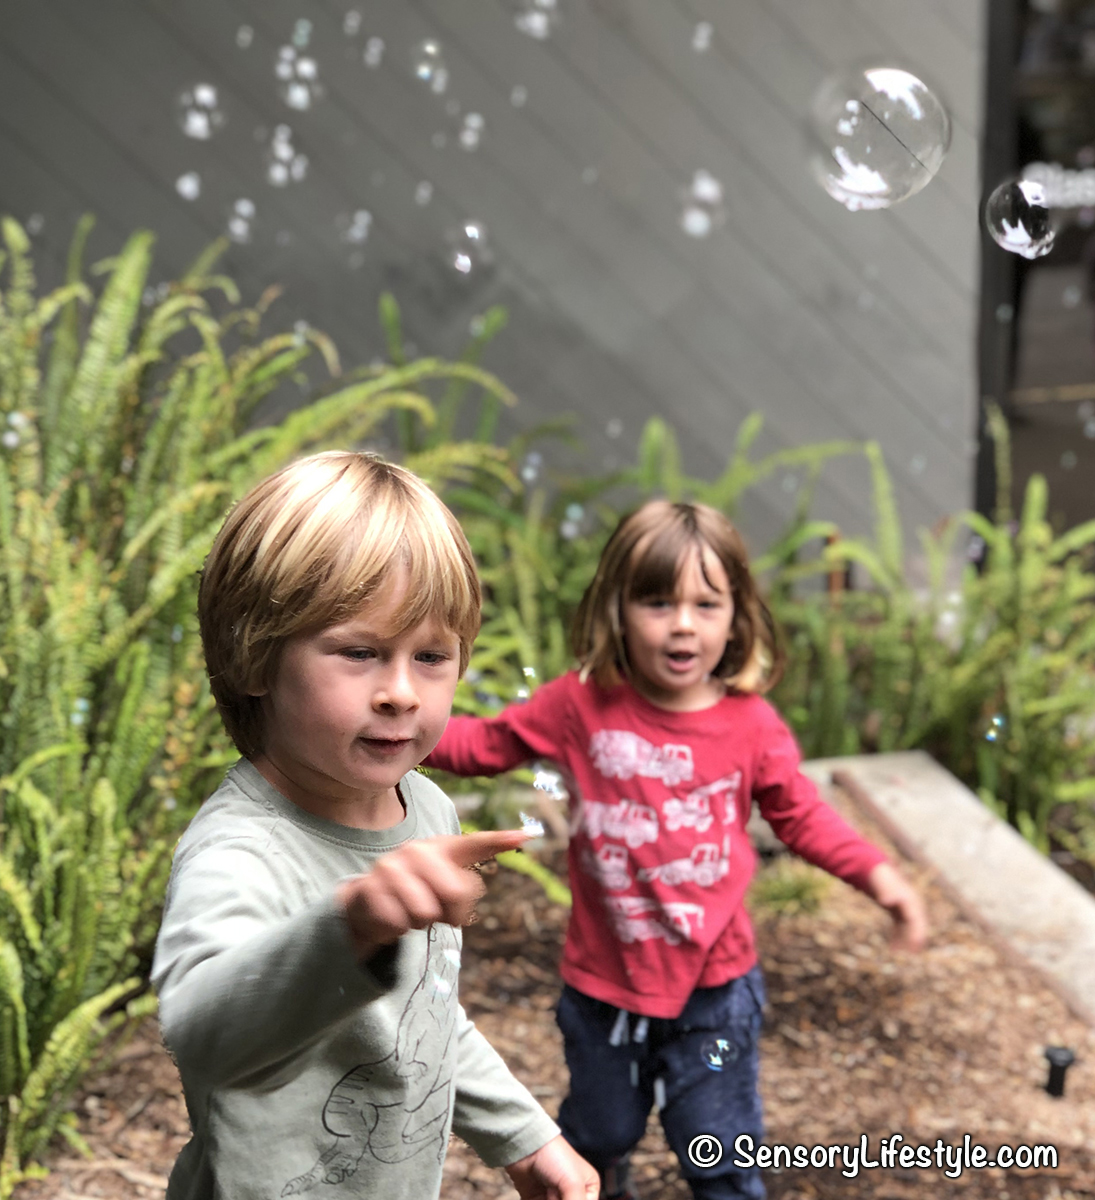 Fine motor skills: Developmental benefits of bubbles